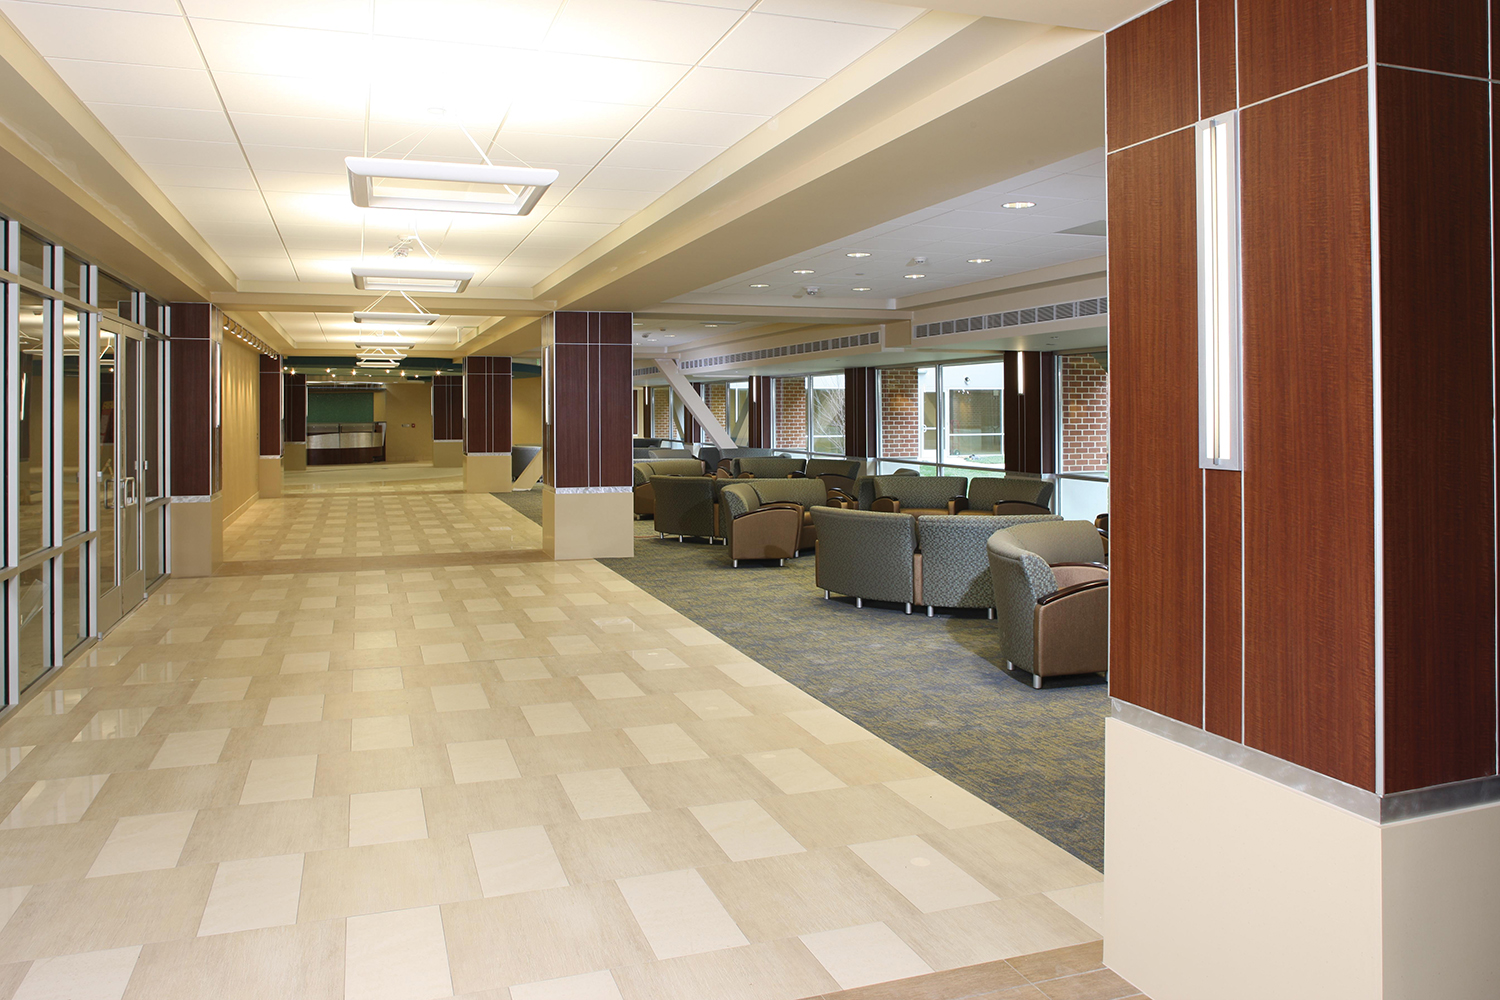 Visage sconces in a sleek hospital lighting design, illuminating a waiting area adjacent to a wide corridor and reception desk.